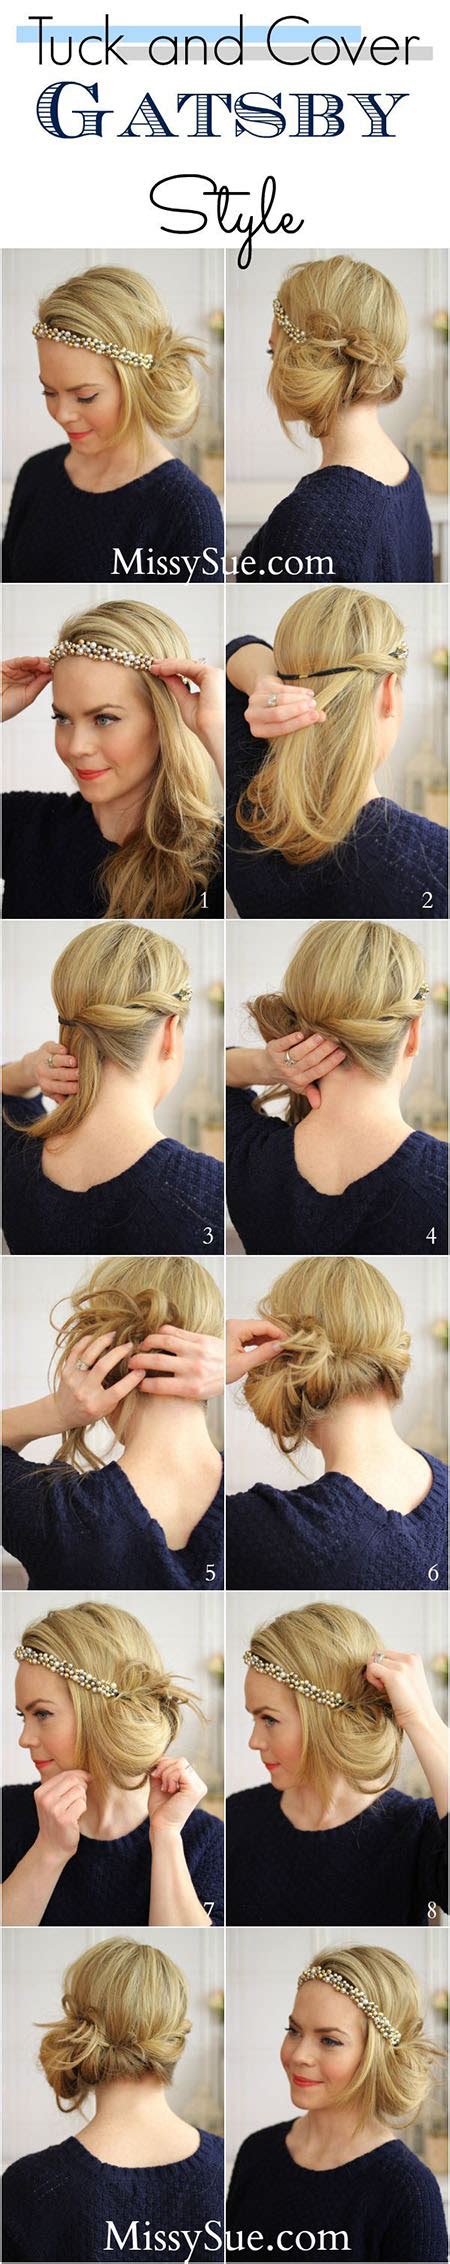 hair tutorial  tutorials